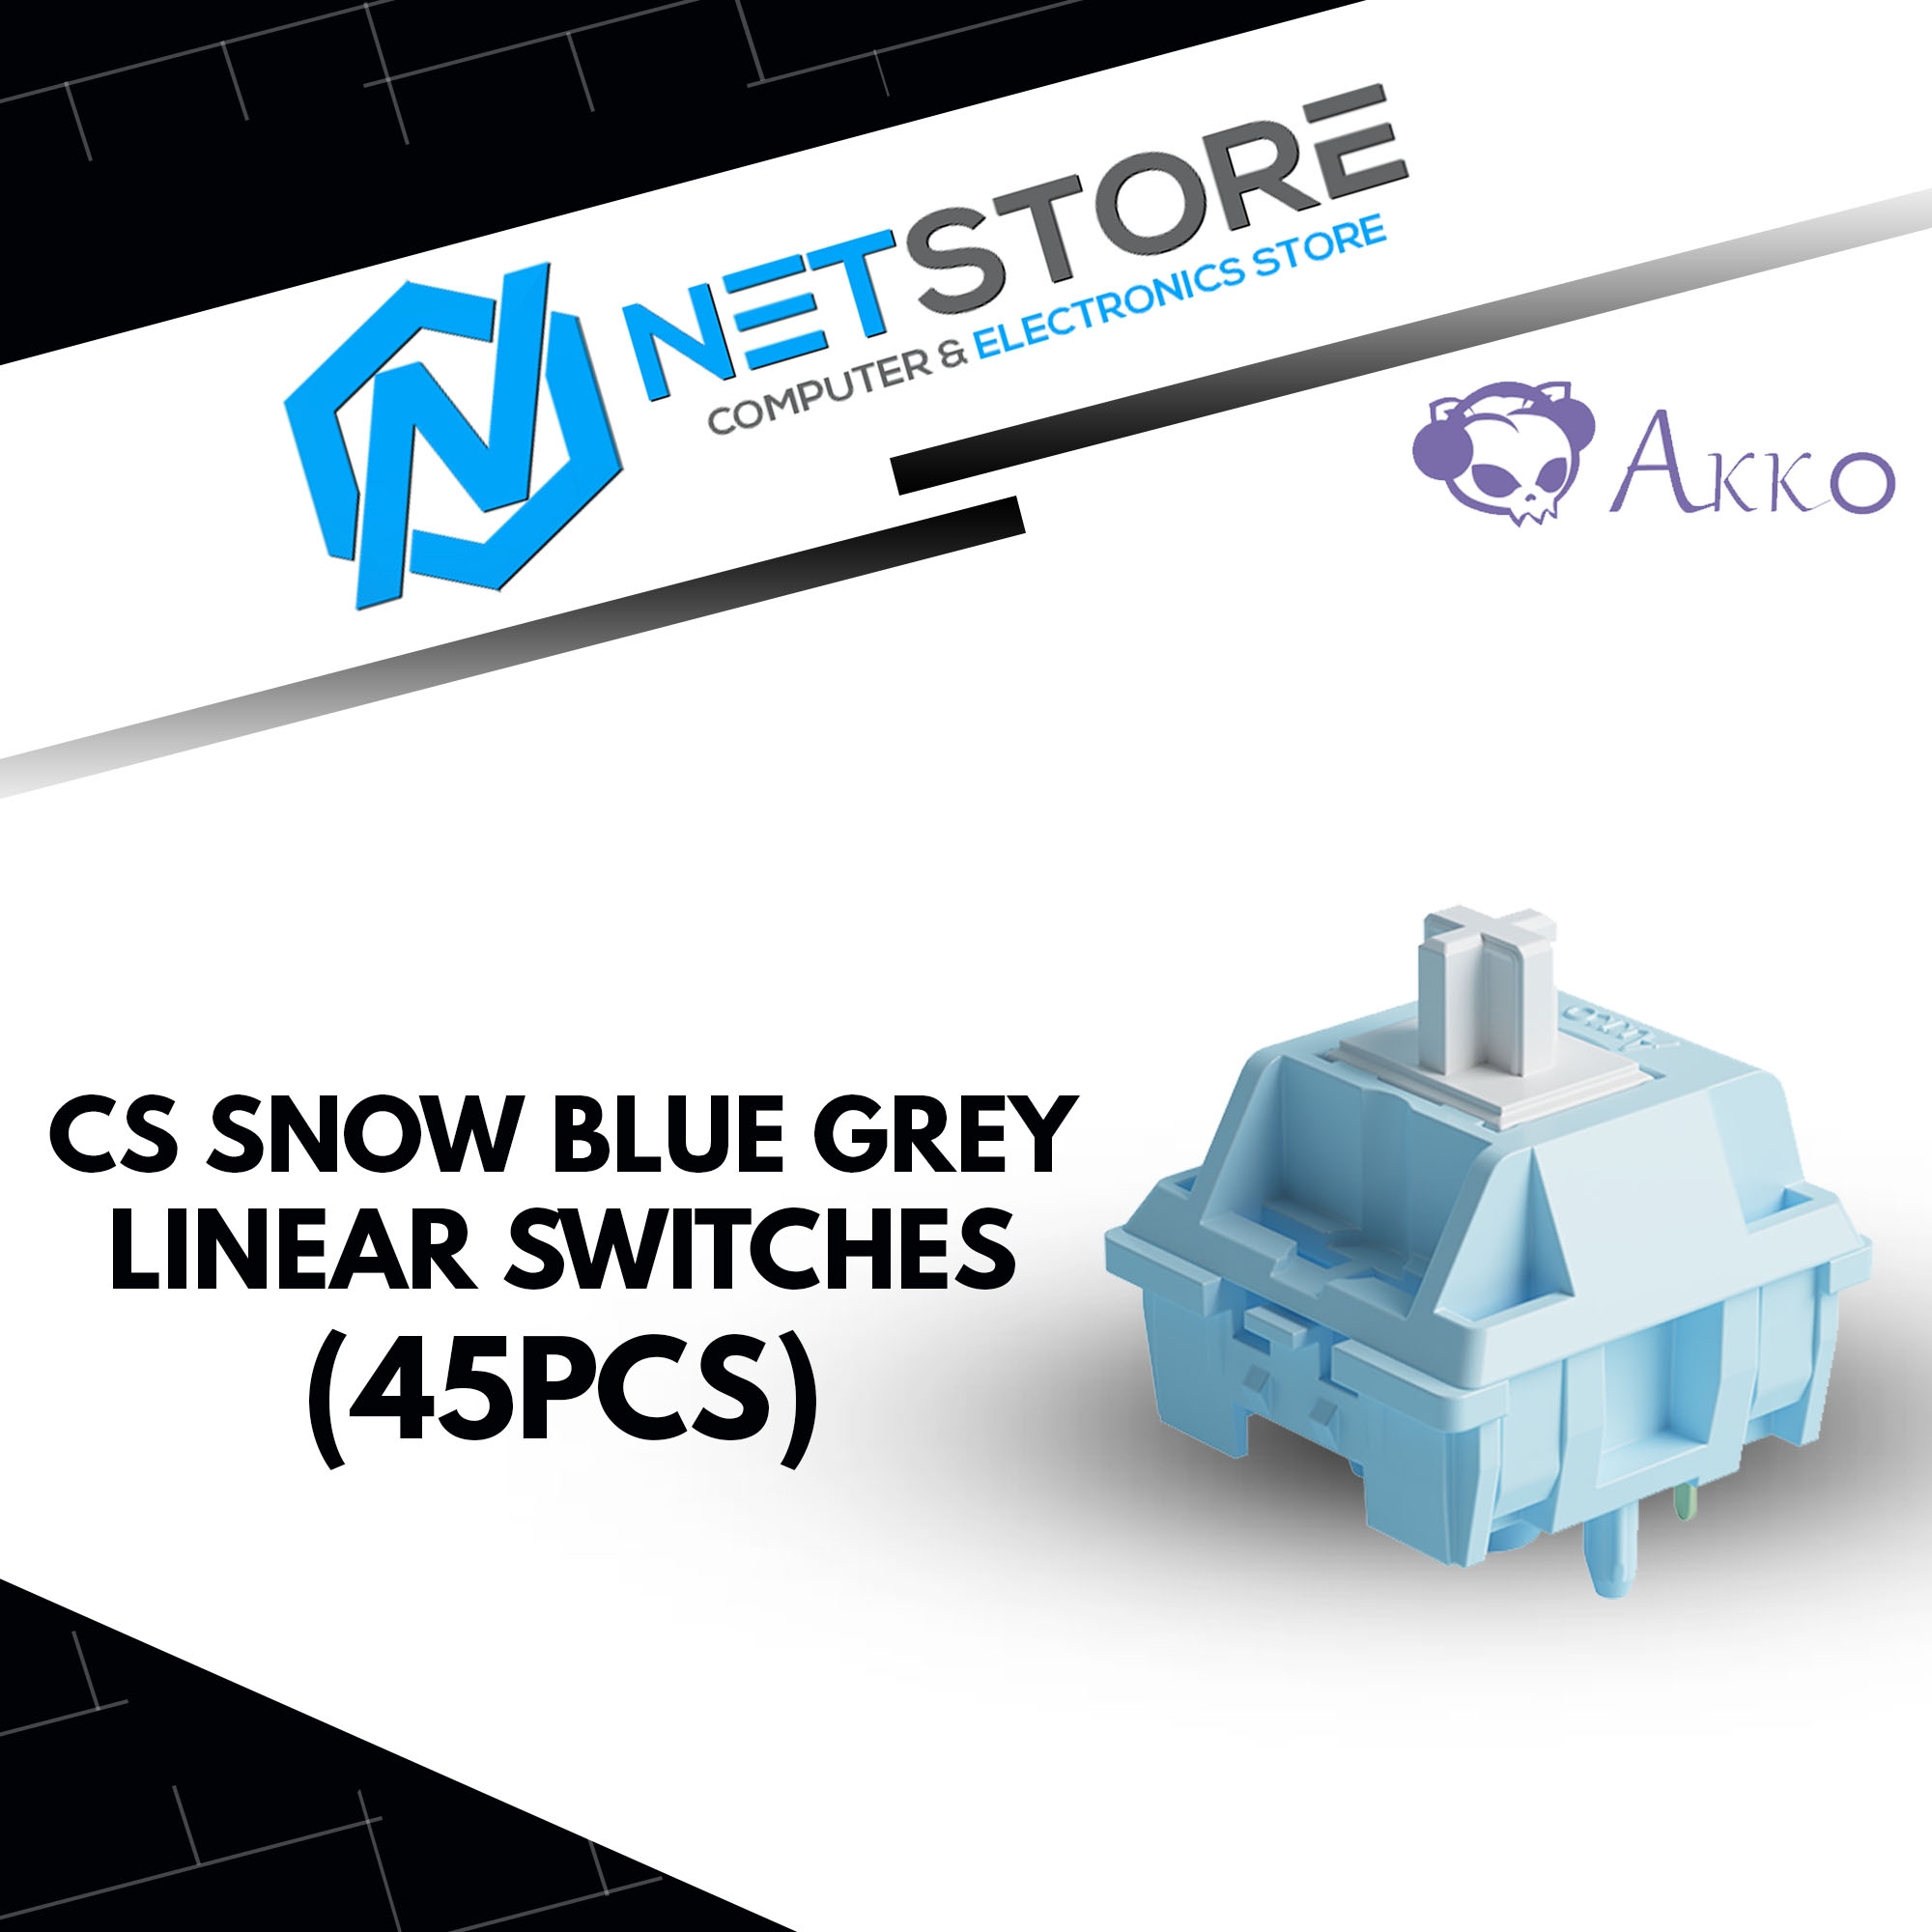 AKKO CS SNOW BLUE GREY LINEAR SWITCHES (45PCS) - 6925758622127